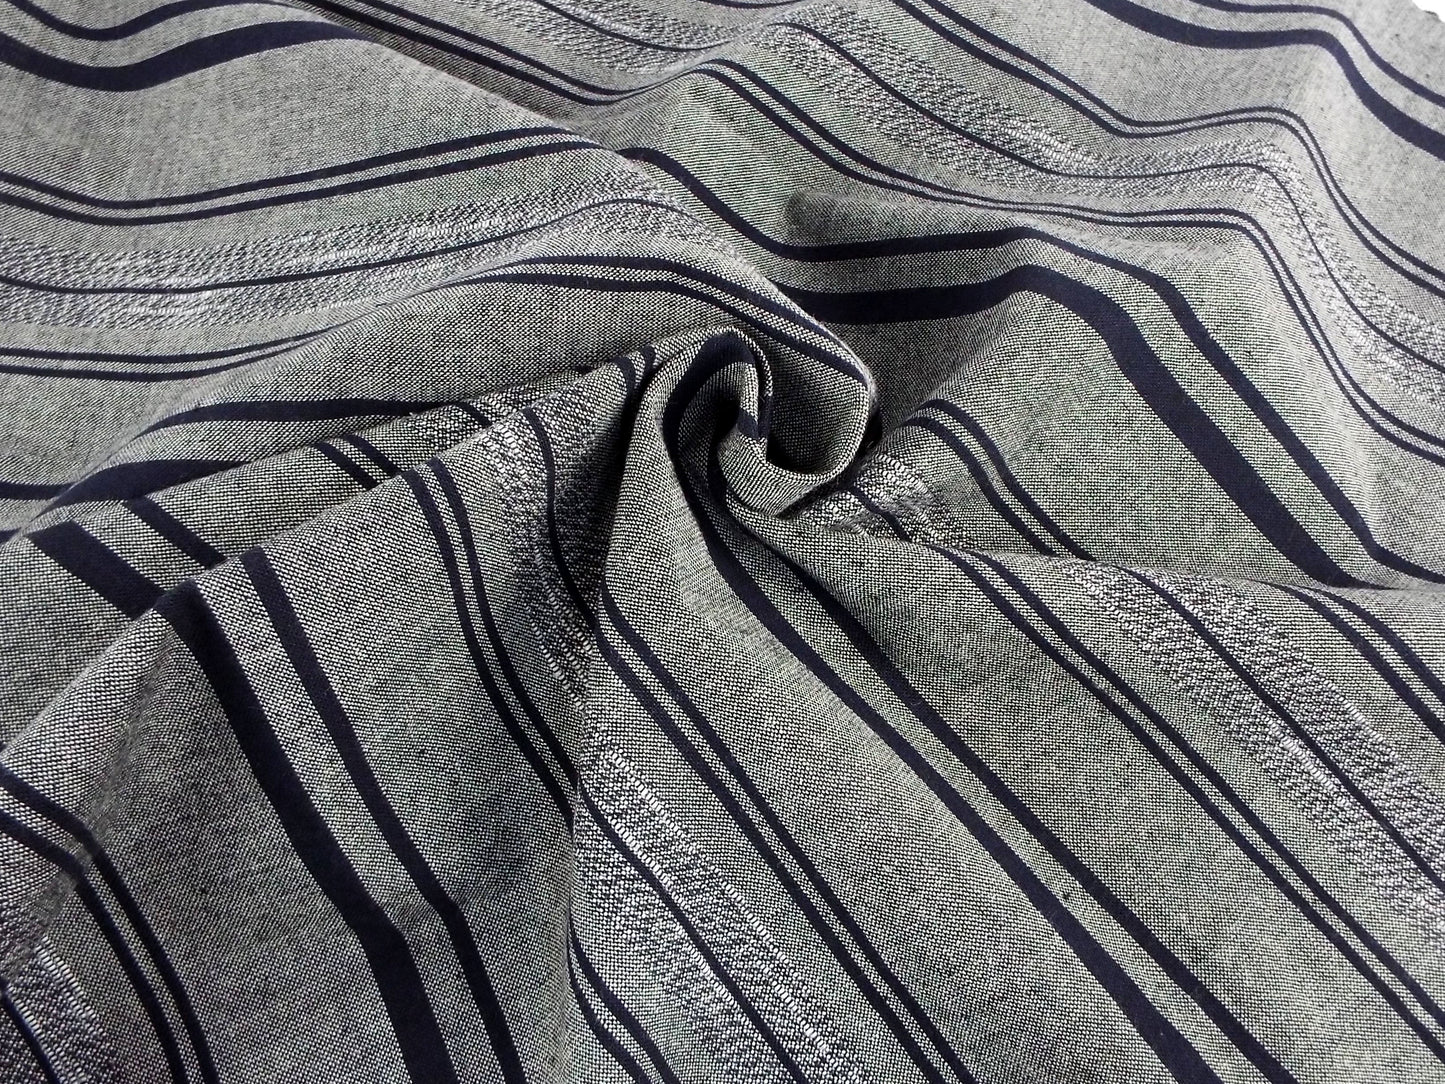 Kameda striped cotton fabric ordinary ground # 22 AB 2 patterns